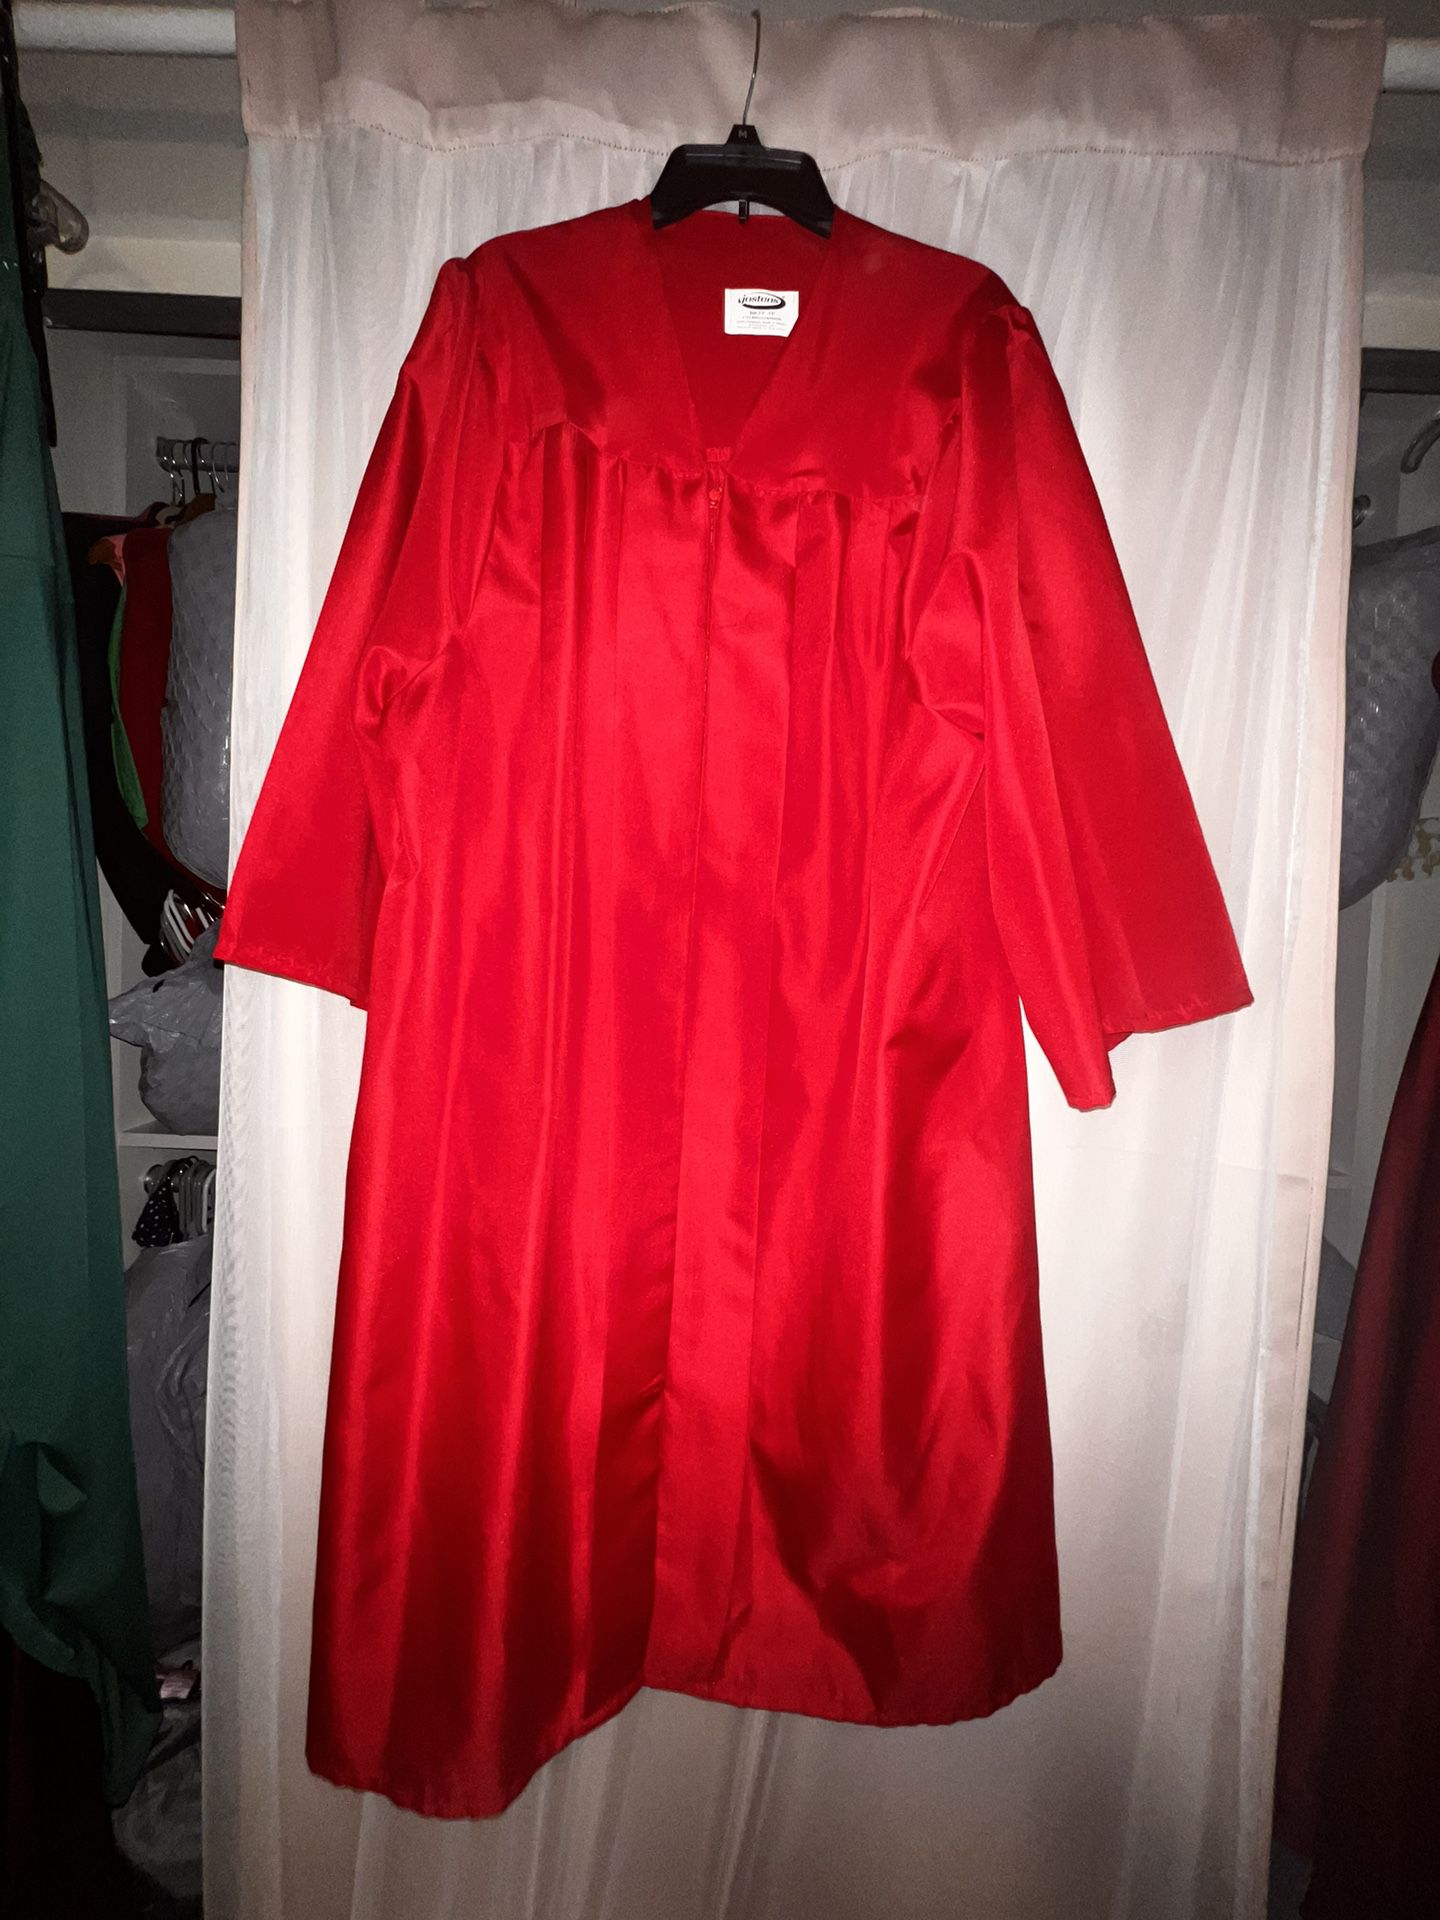 Jostens Red Graduation Gown